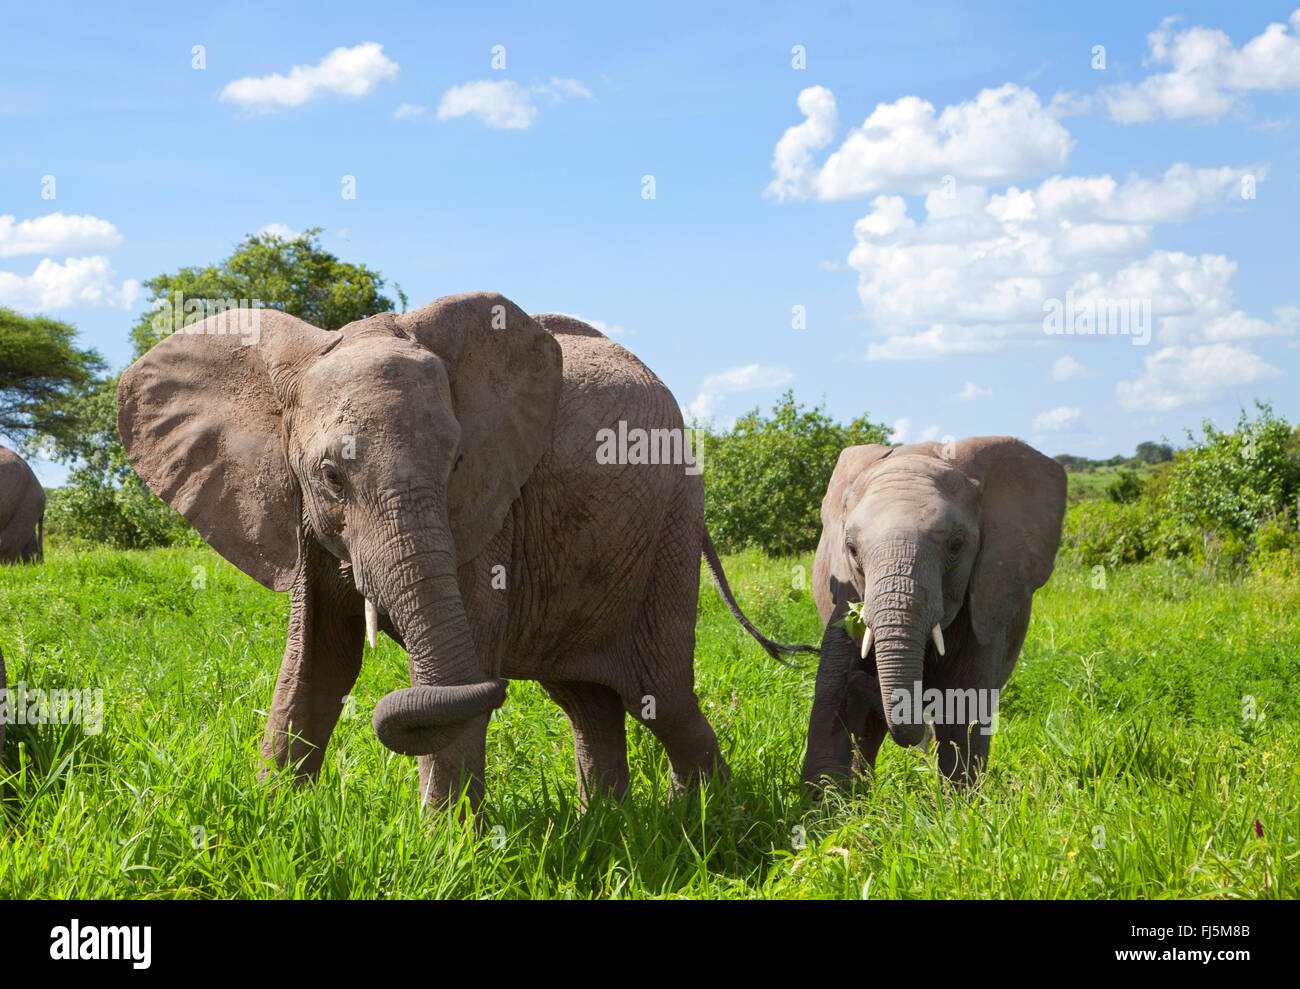 African elephant (Loxodonta africana), cow elephant with calf on grass, Kenya Stock Photo